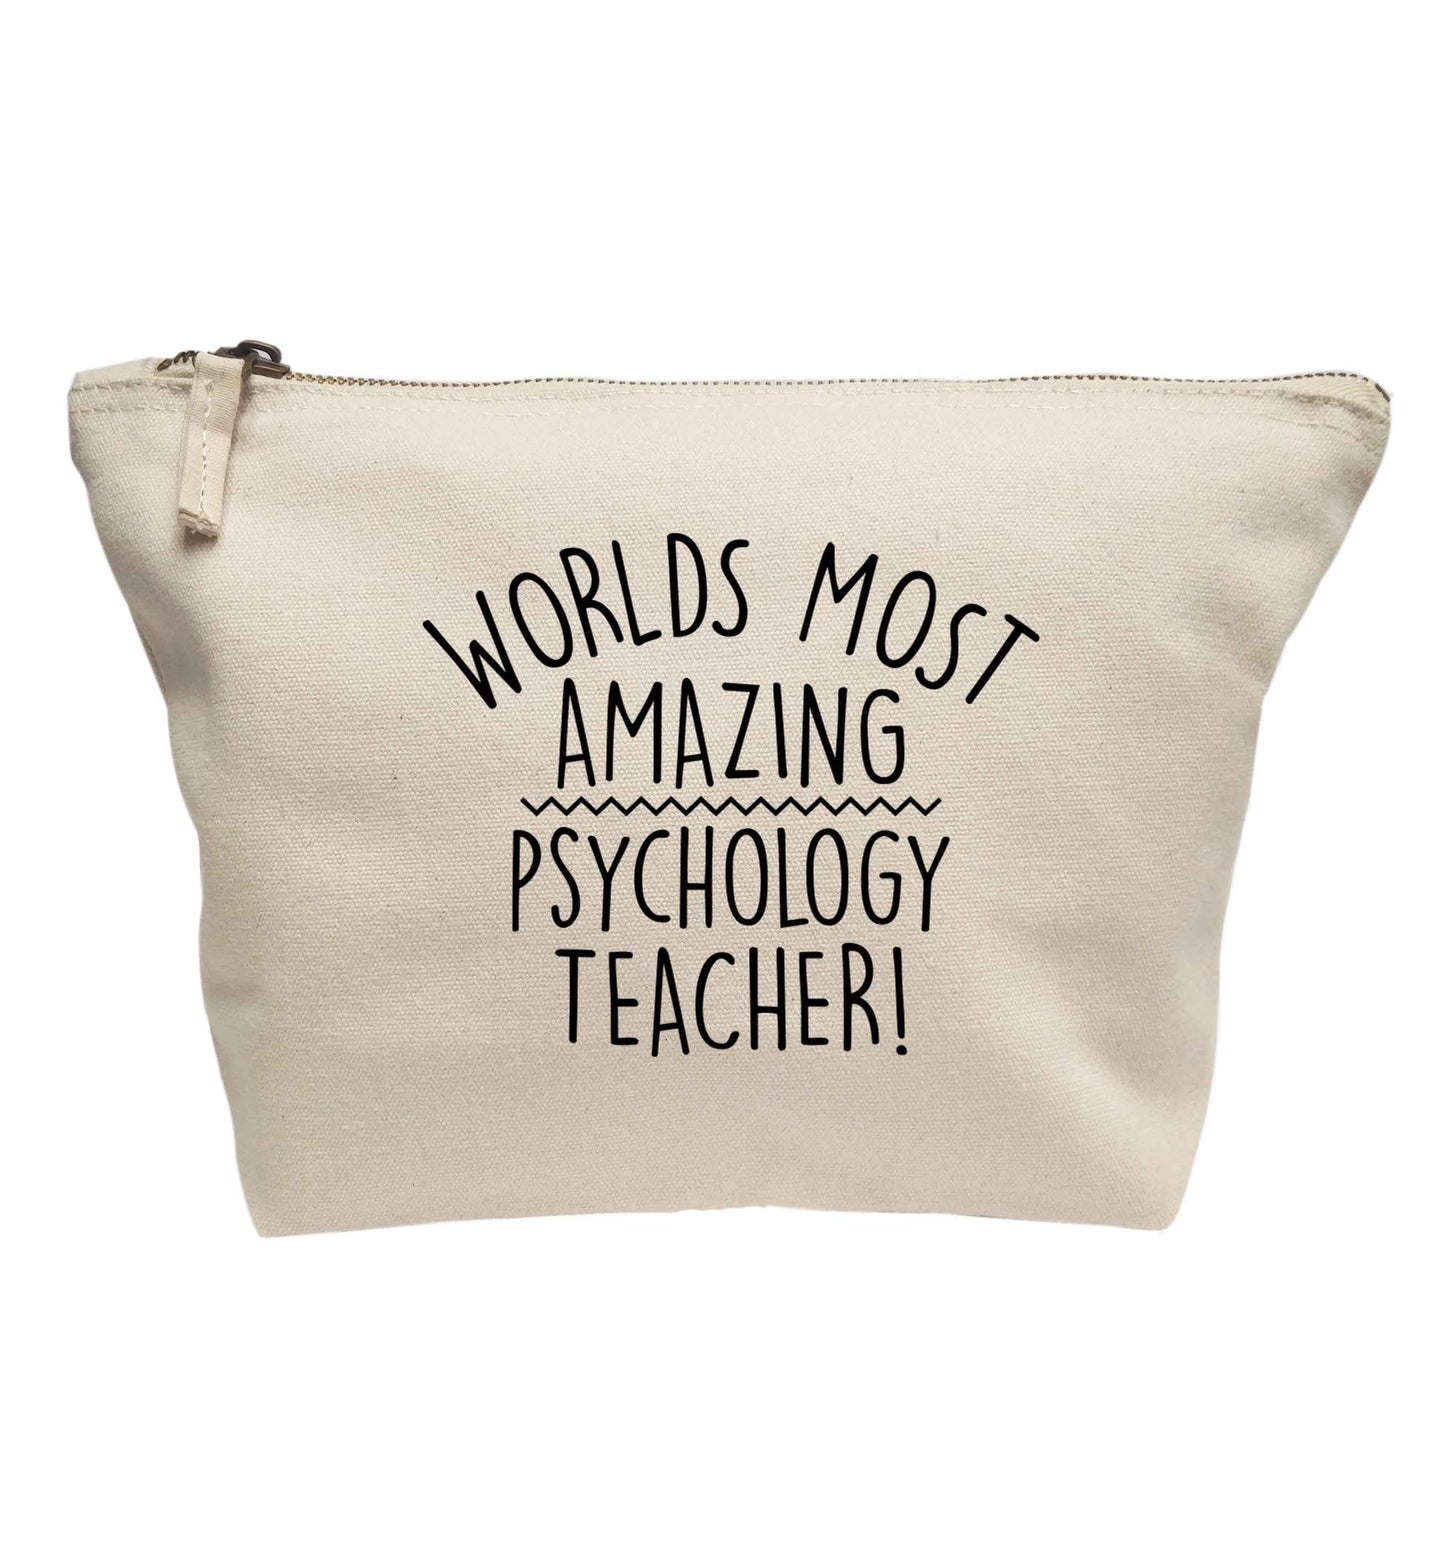 Worlds most amazing psychology teacher | Makeup / wash bag